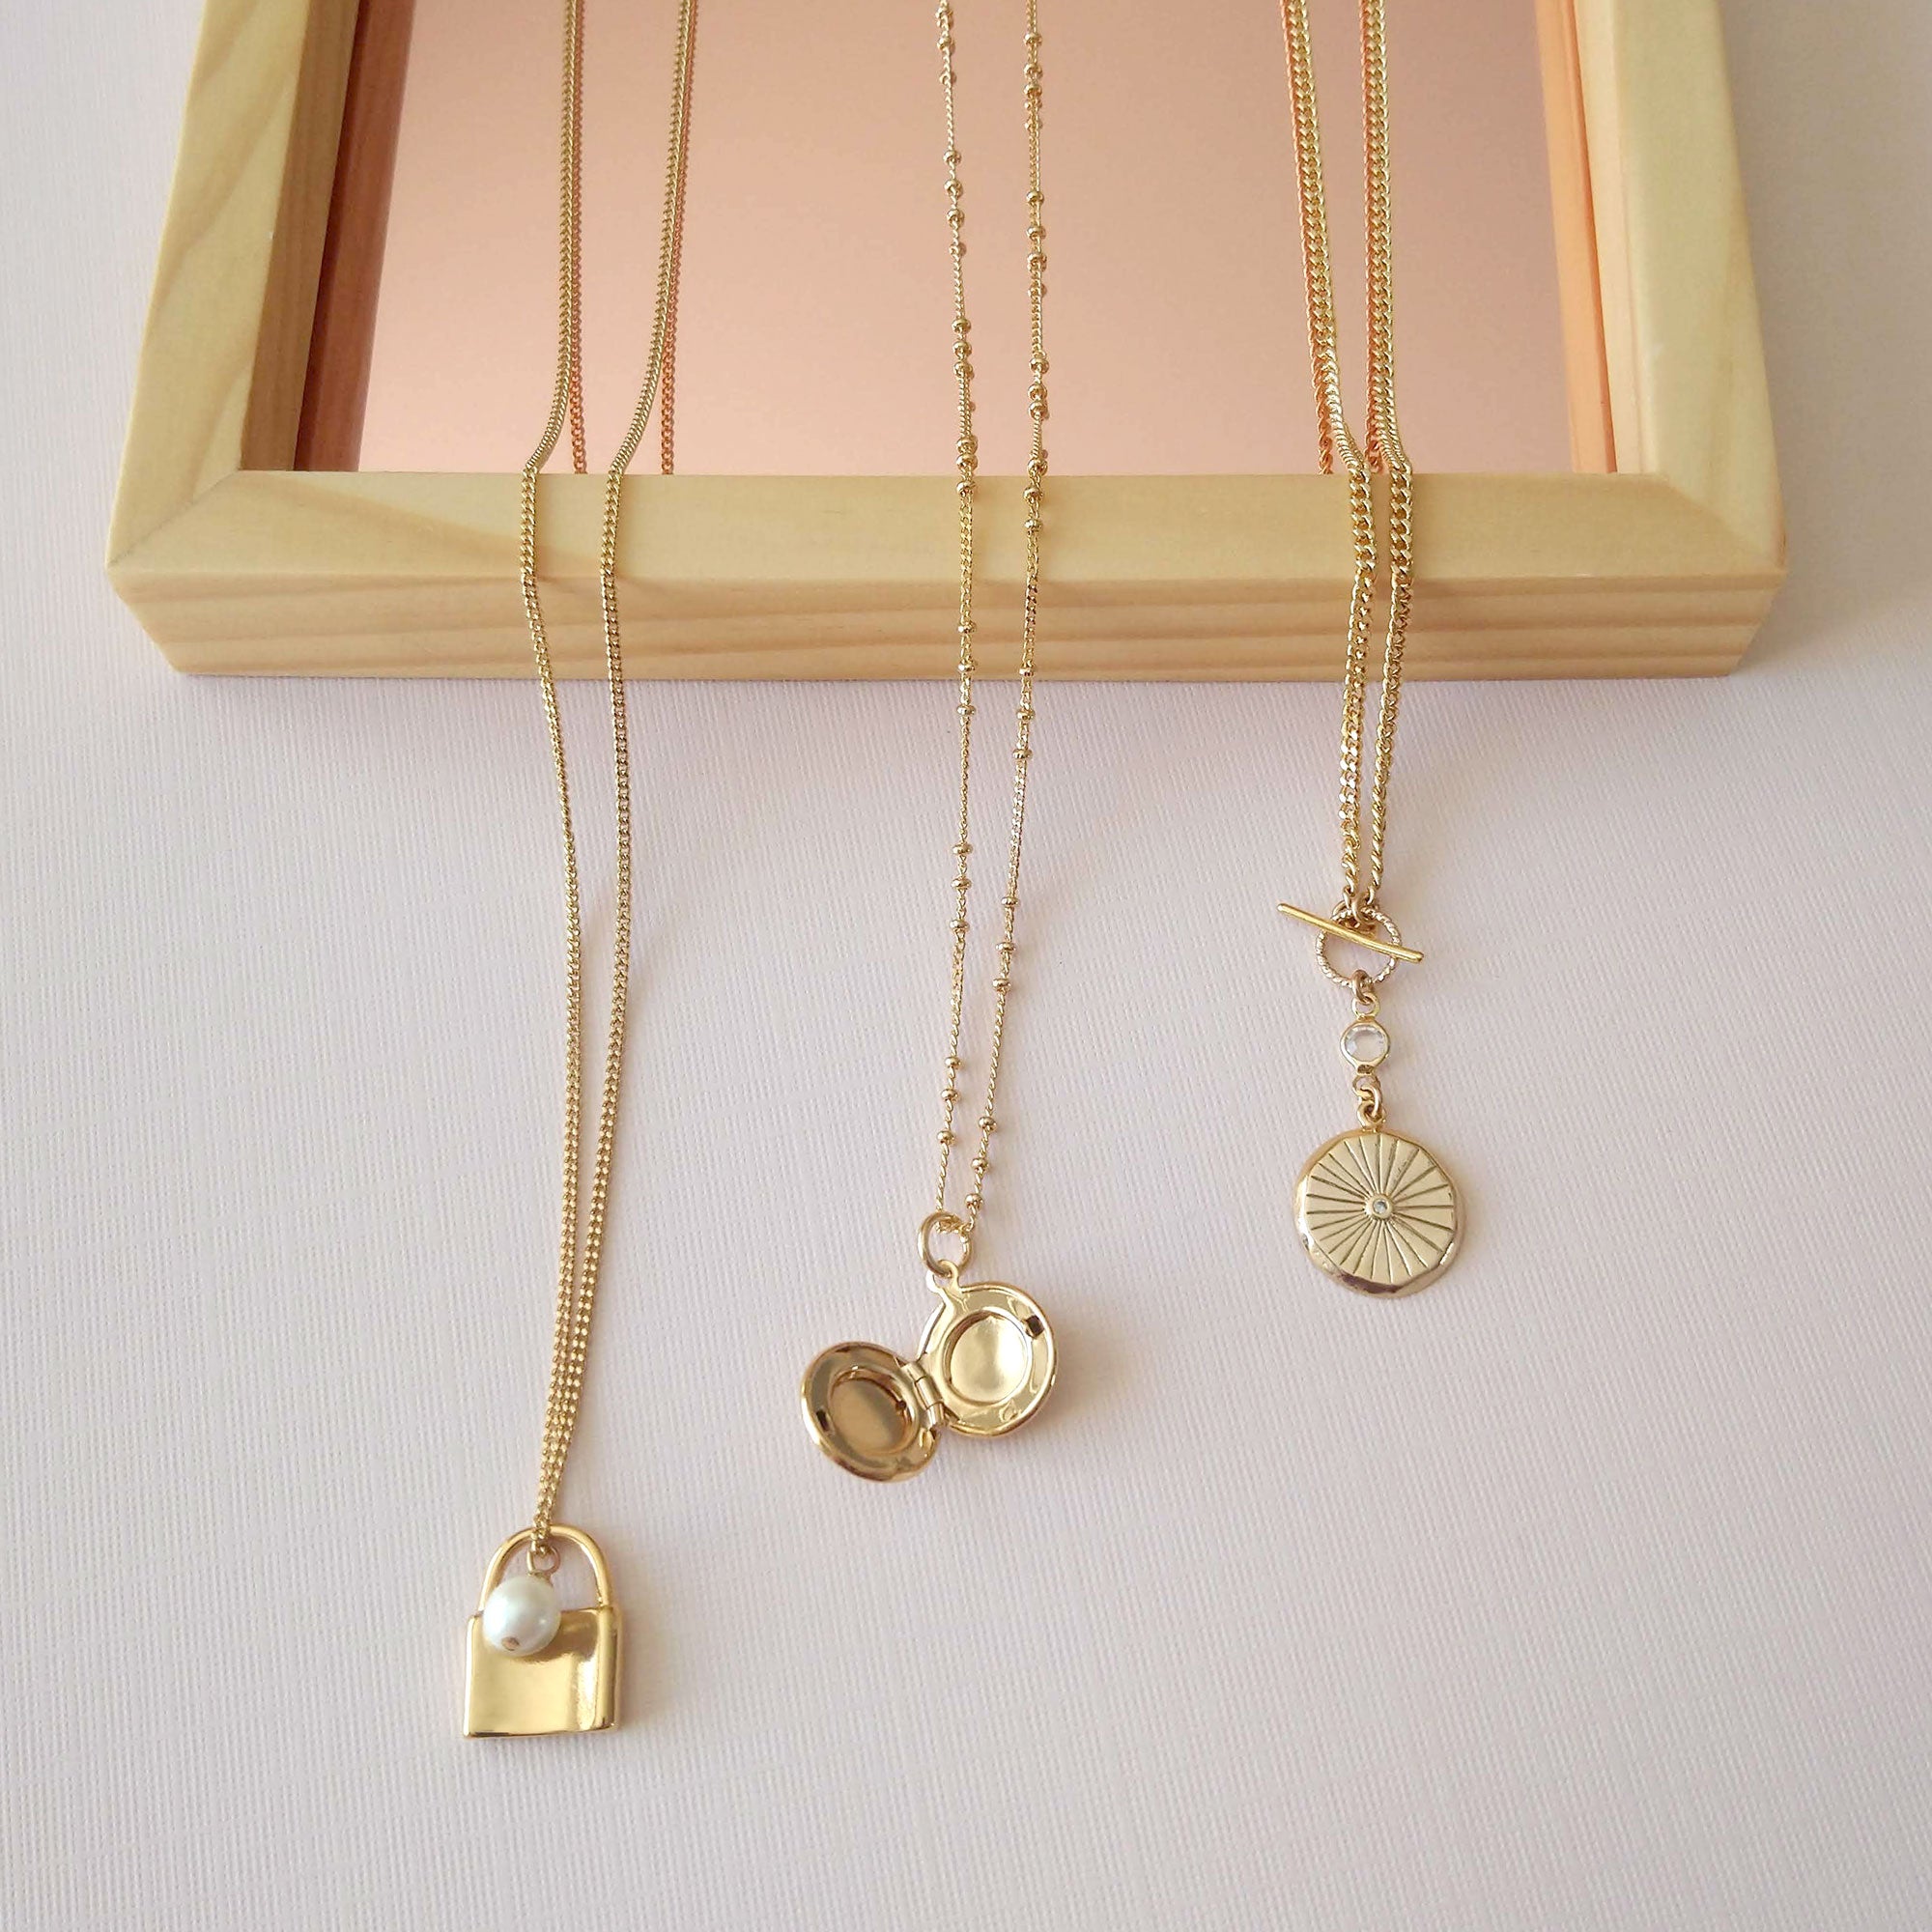 gold charm necklaces assortment locket